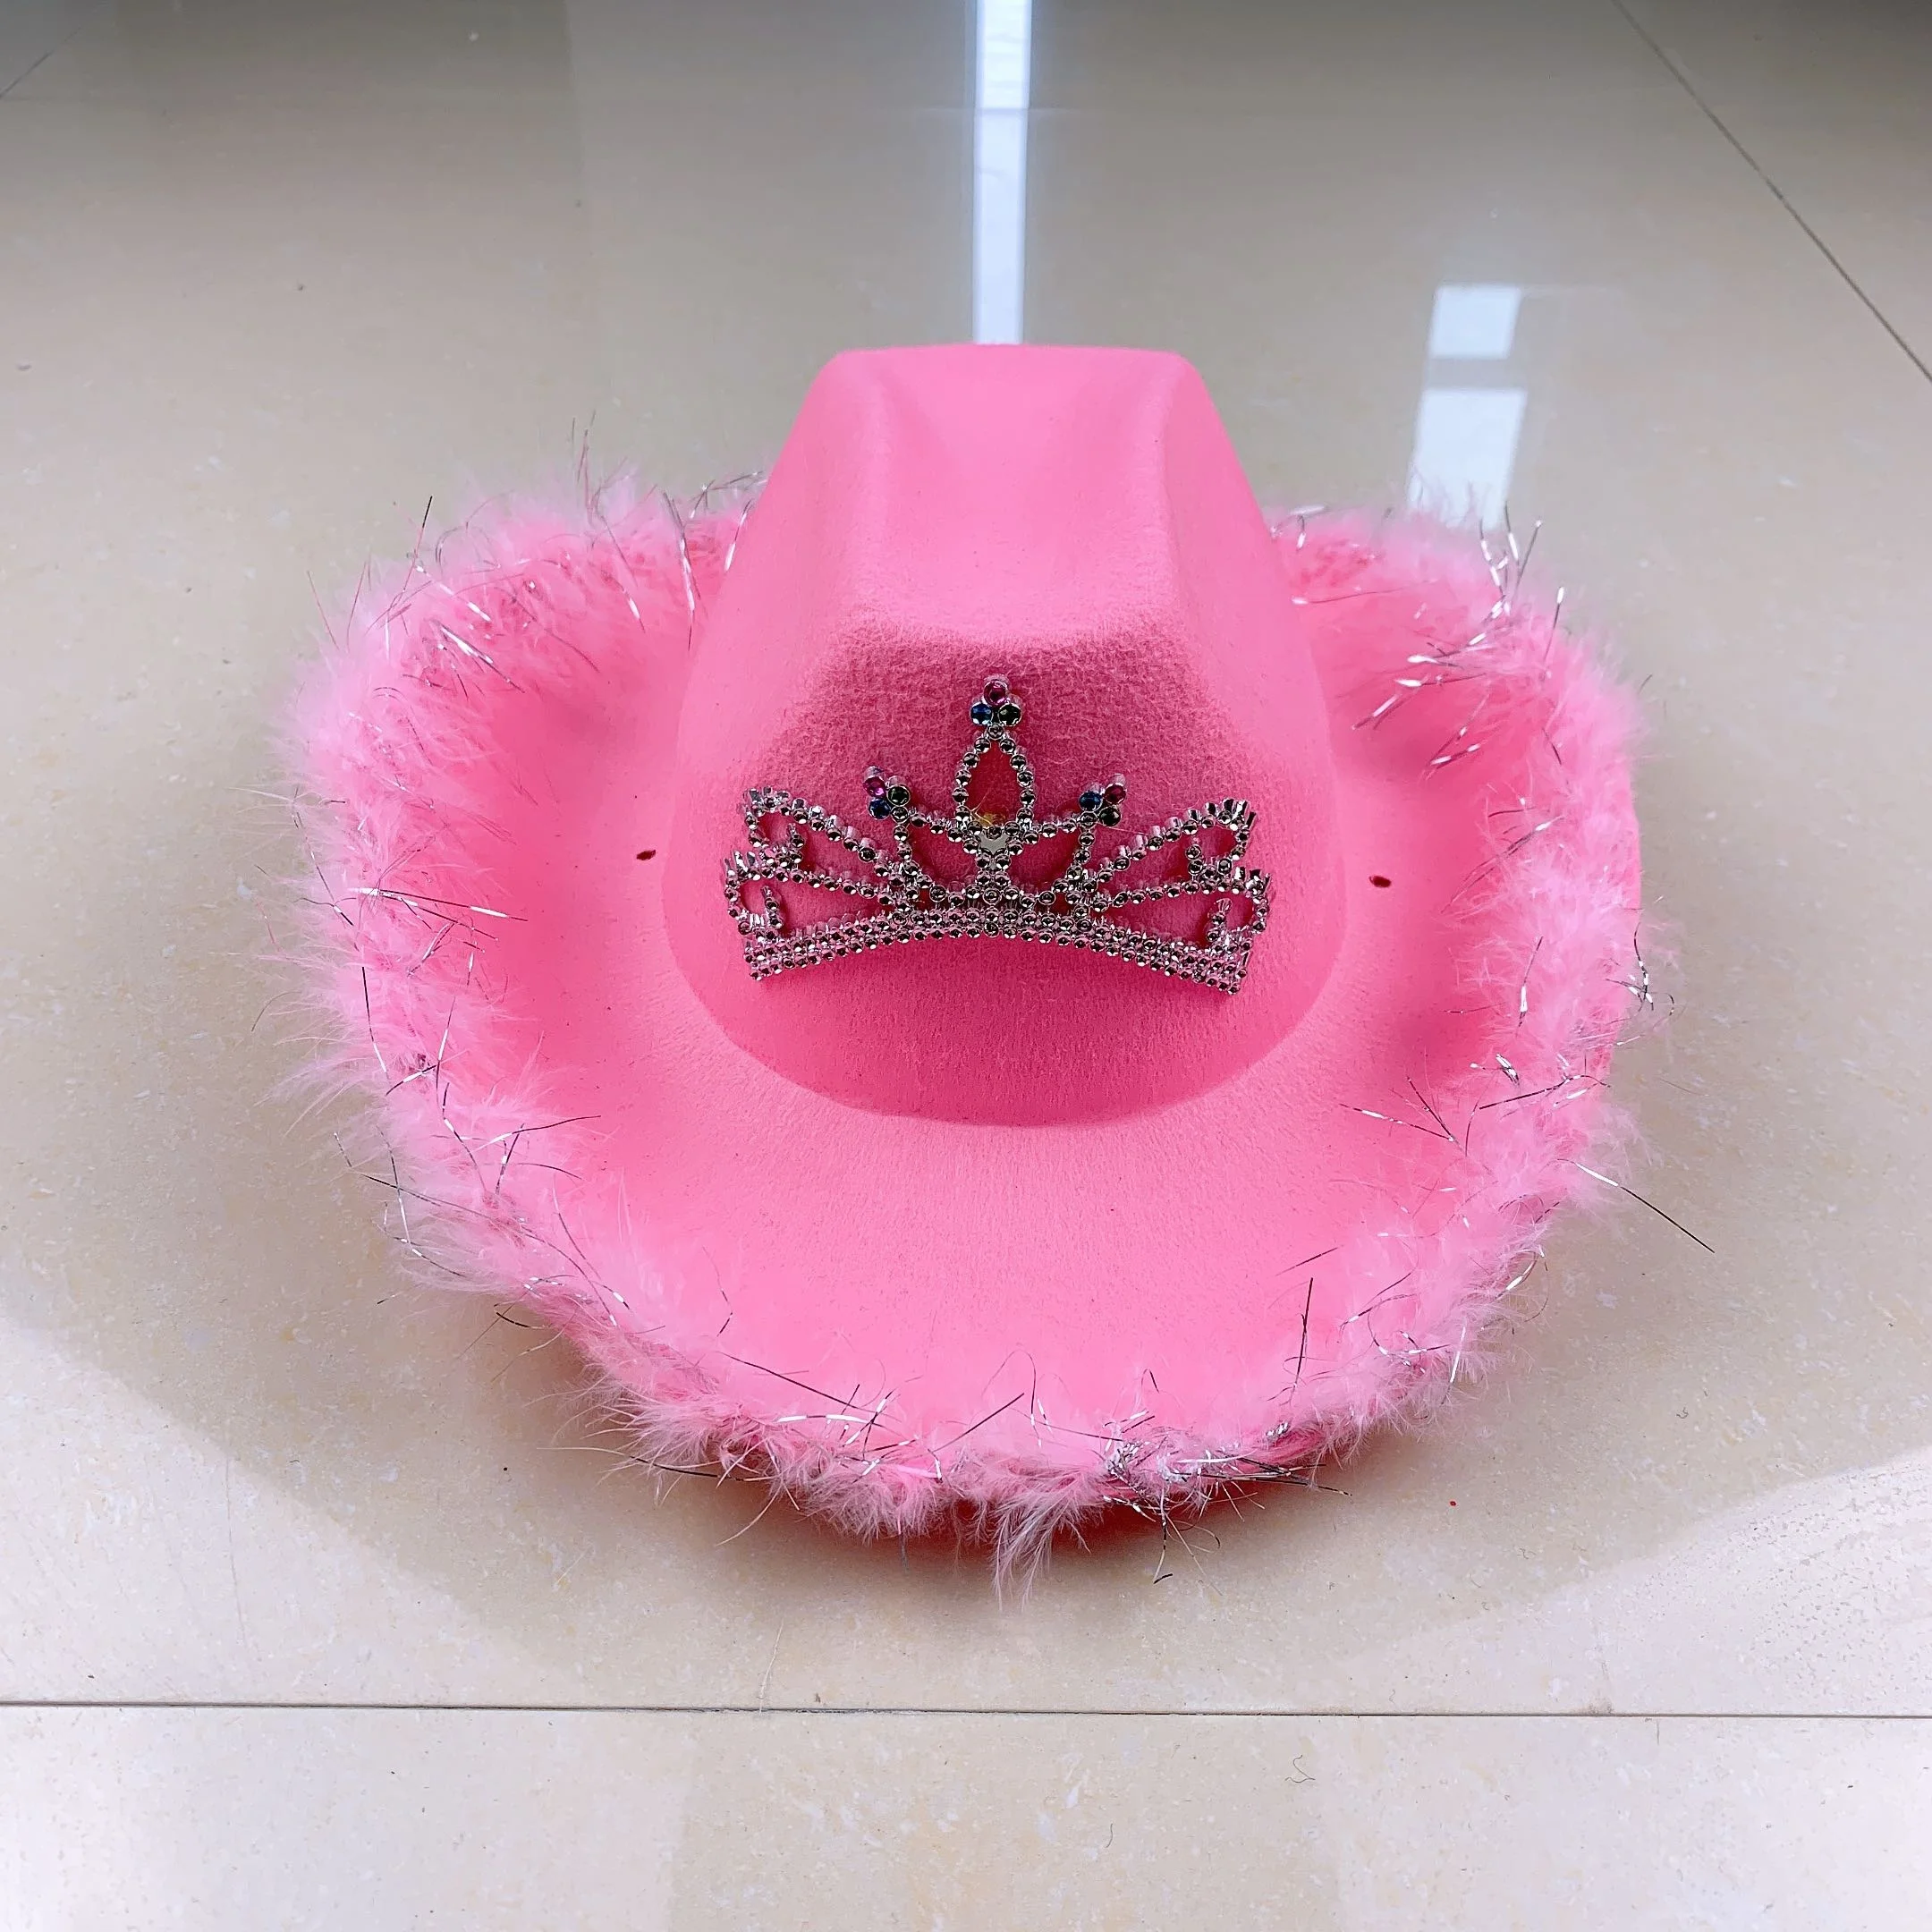 
Pink Rhinestone Bling Blinking Luxury Kids Pearls Felt Fuzzy Fashion Cowboy Cowgirl Hats 